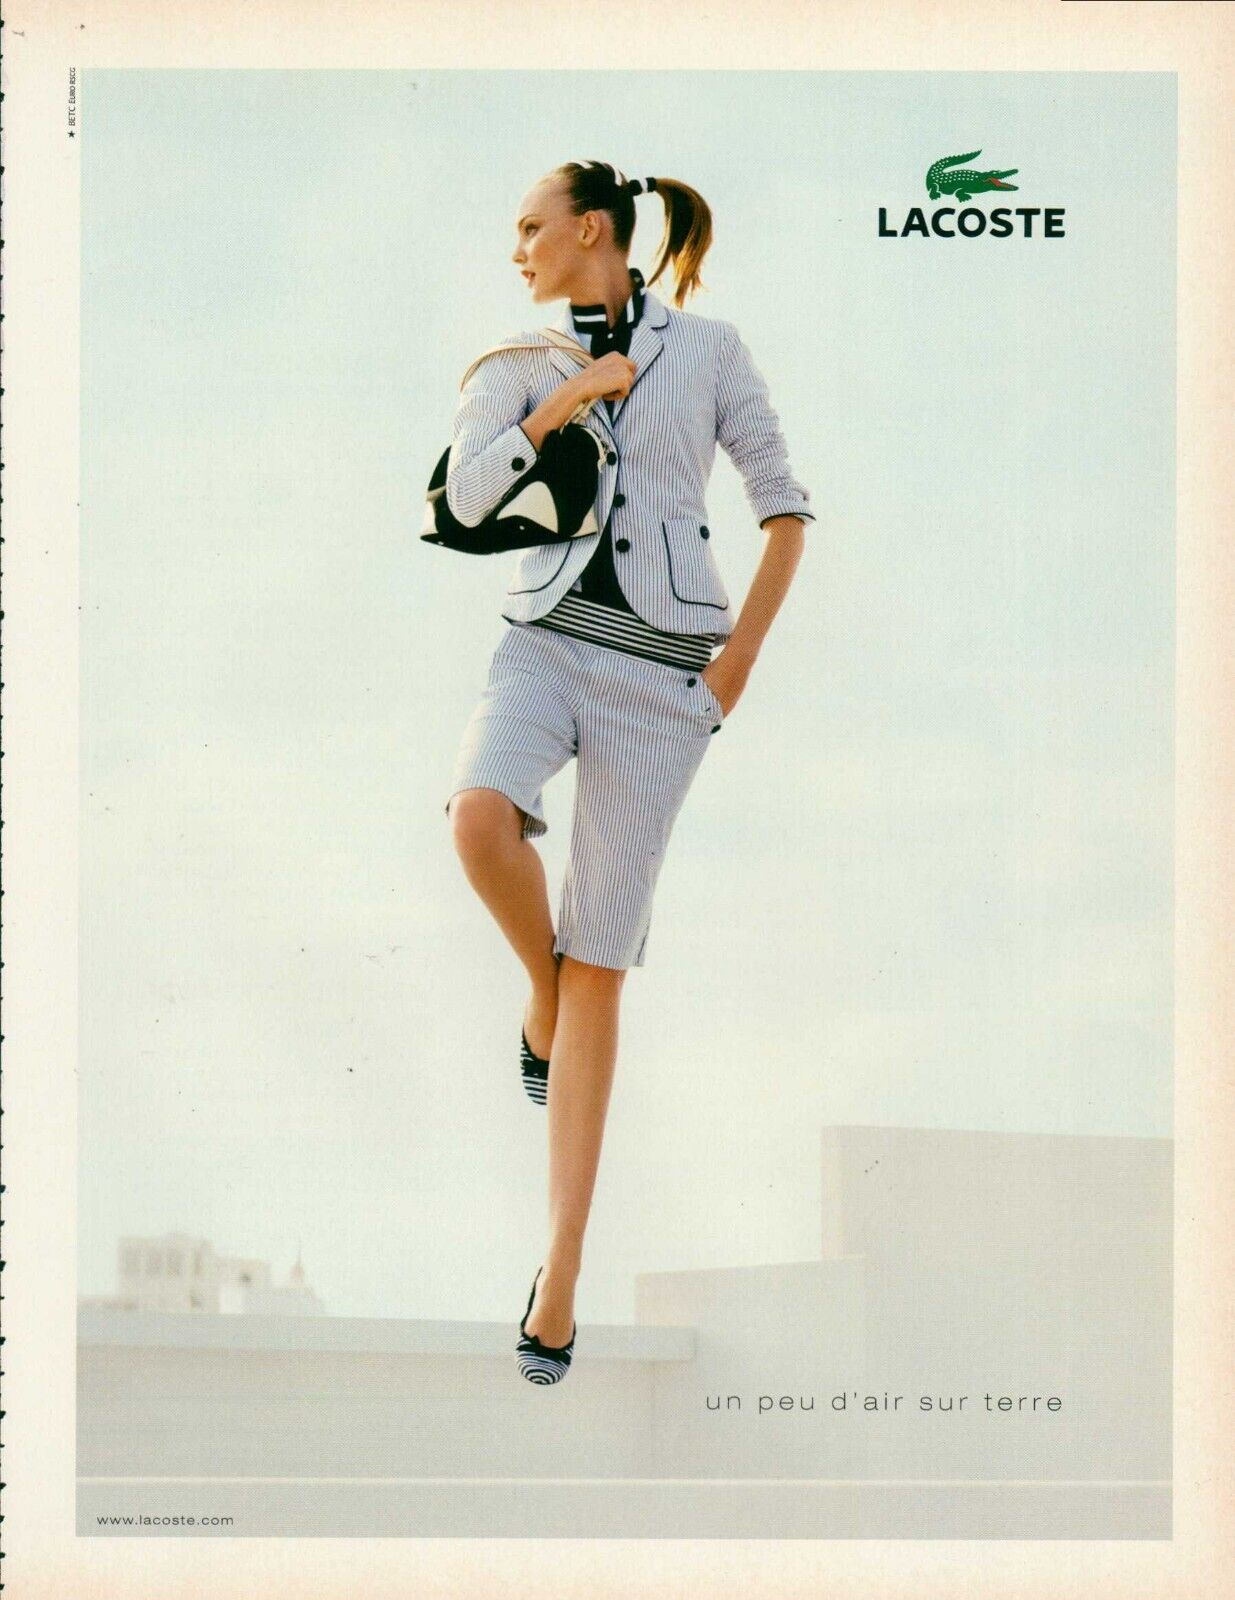 LACOSTE Footwear Magazine Print Ad Advert long legs high heels shoes 2007